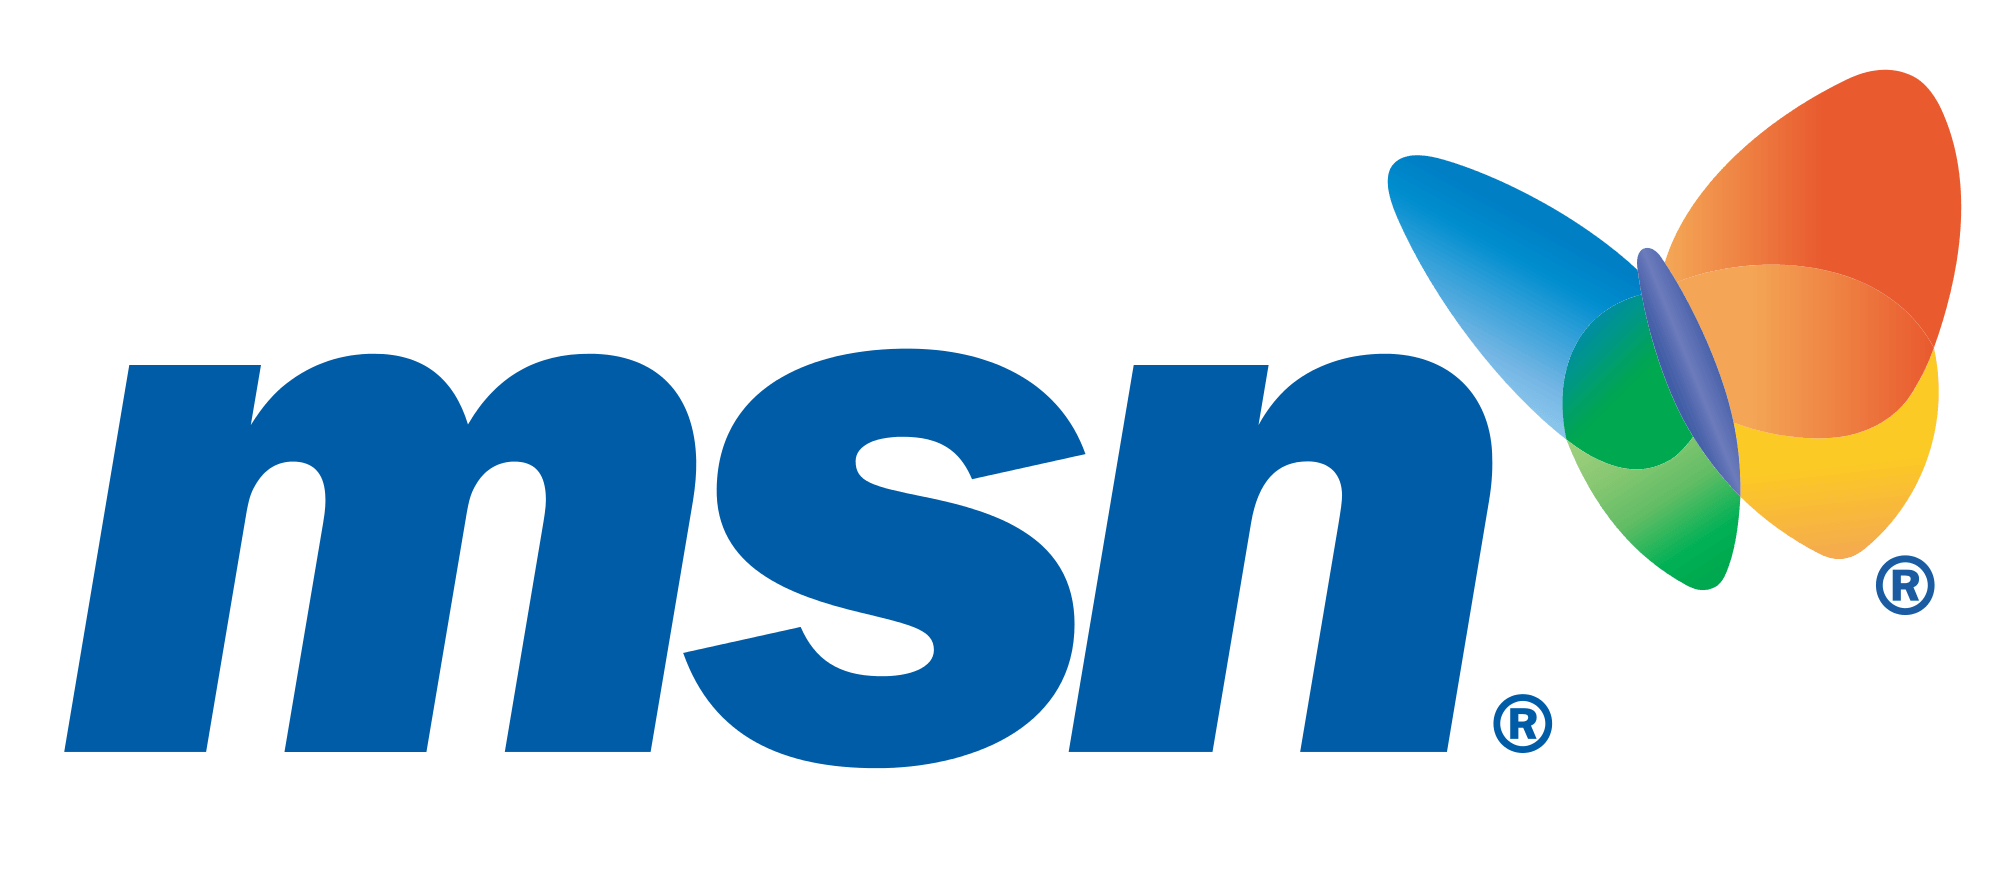 Msn.com Logo - MSN logo - bio-bean